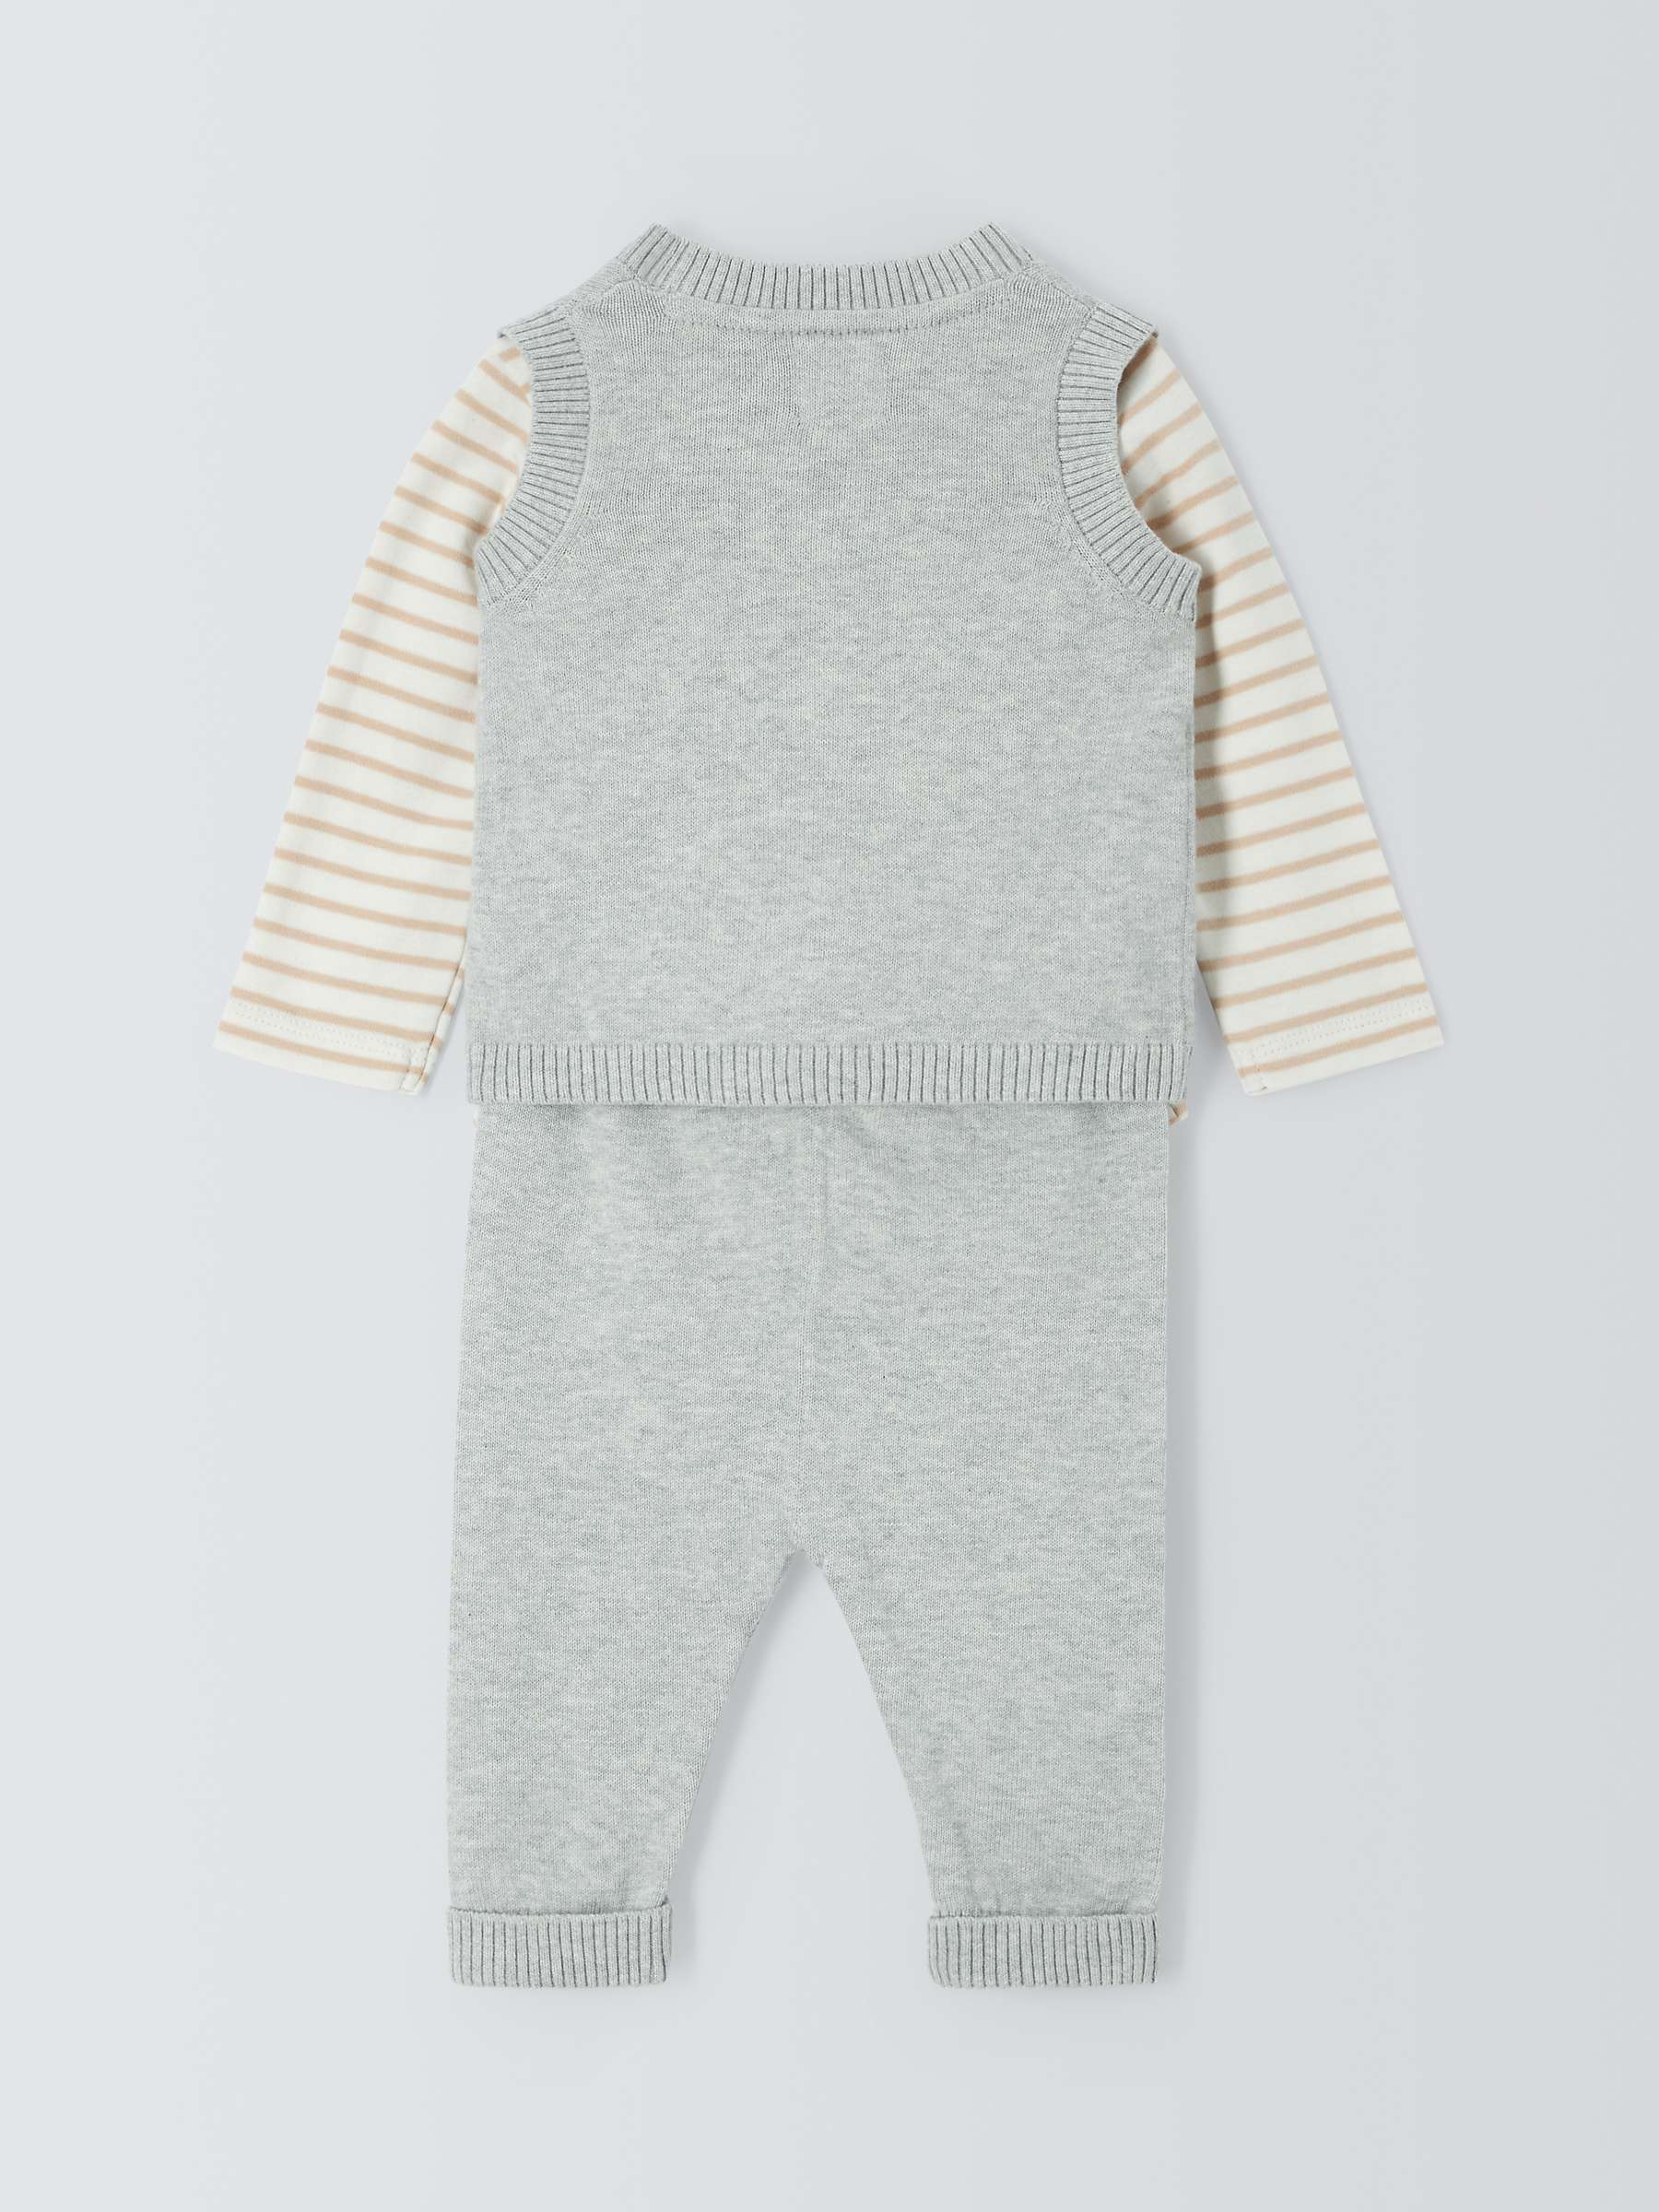 Buy John Lewis Baby Bodysuit, Knitted Trousers & Vest Cardigan Set, Grey/Multi Online at johnlewis.com